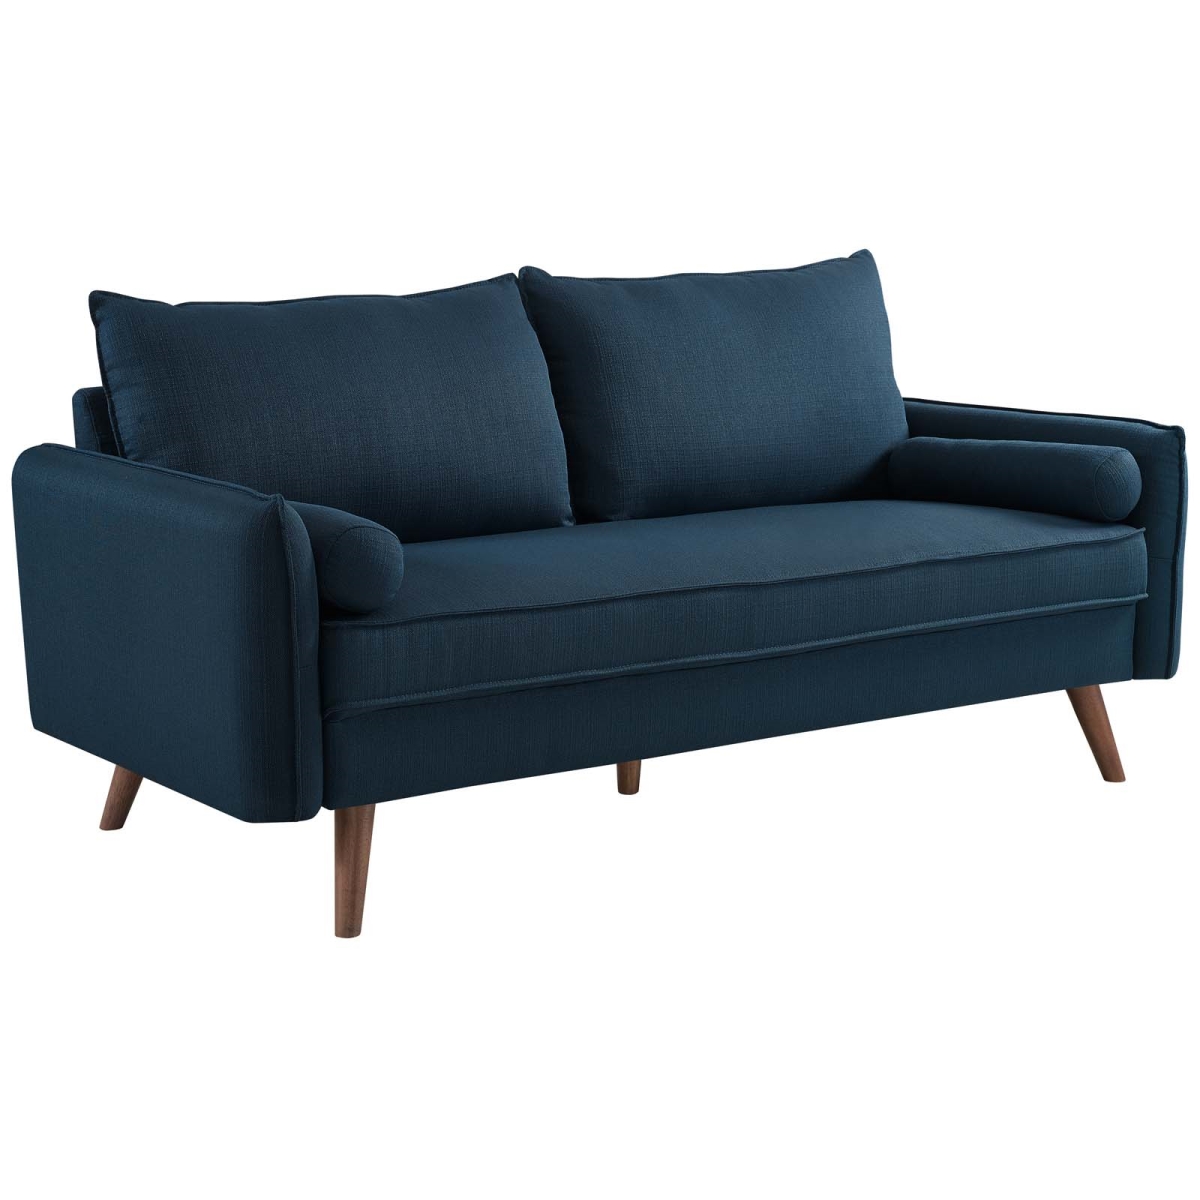 Eei-3092-azu Revive Upholstered Fabric Sofa - Azure, 33.5 X 72 X 32.5 In.